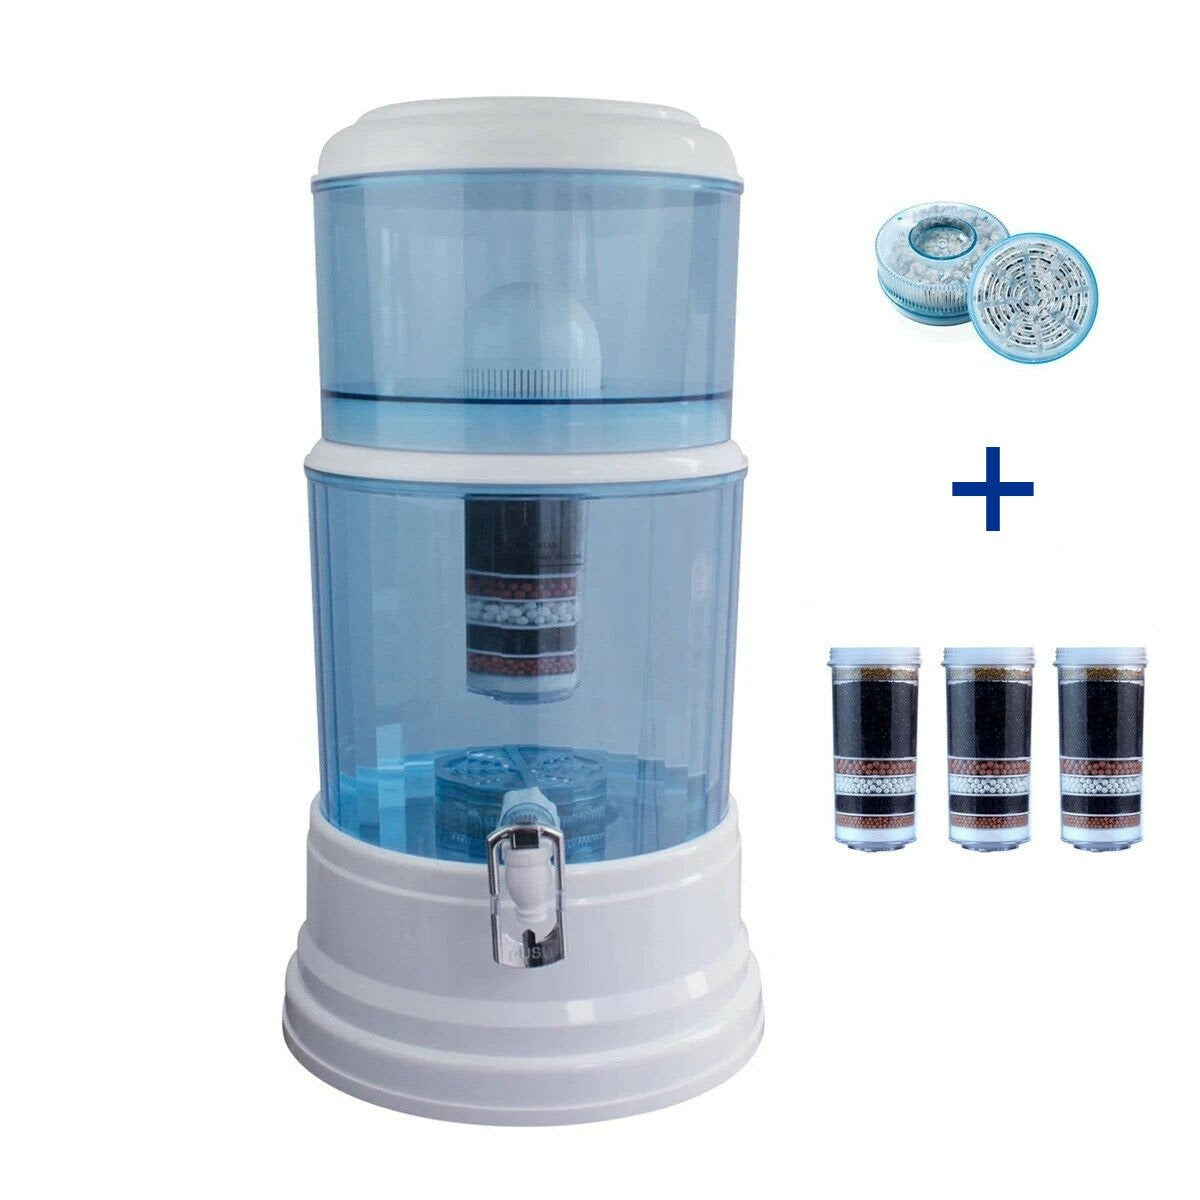 Aimex MDM Water Purifier 20L Dispenser + 3 x 8 Stage Water Filter + Maifan Stone - MDMAustralian